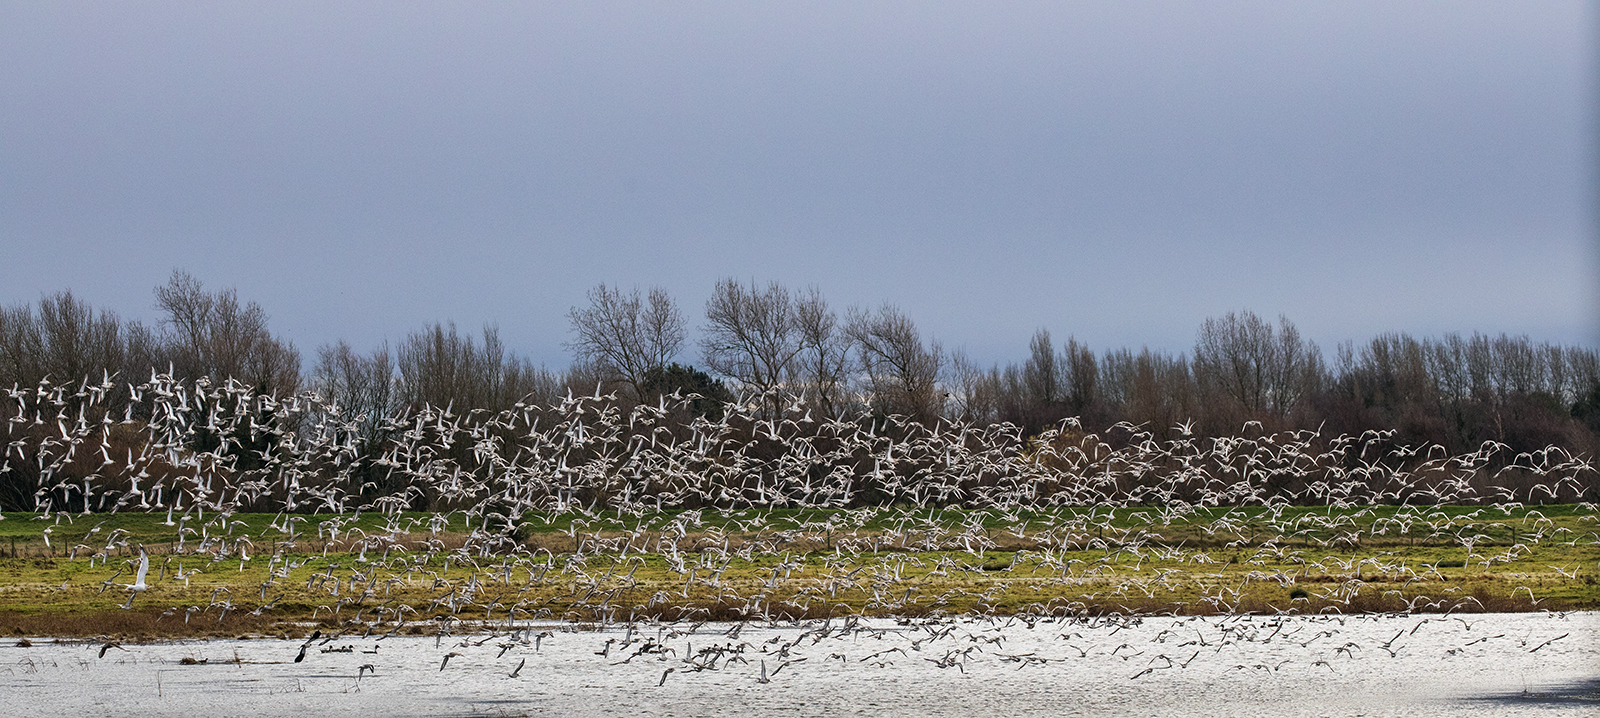 Marshside 2 Black-tailedGodwit  flock (1115K)